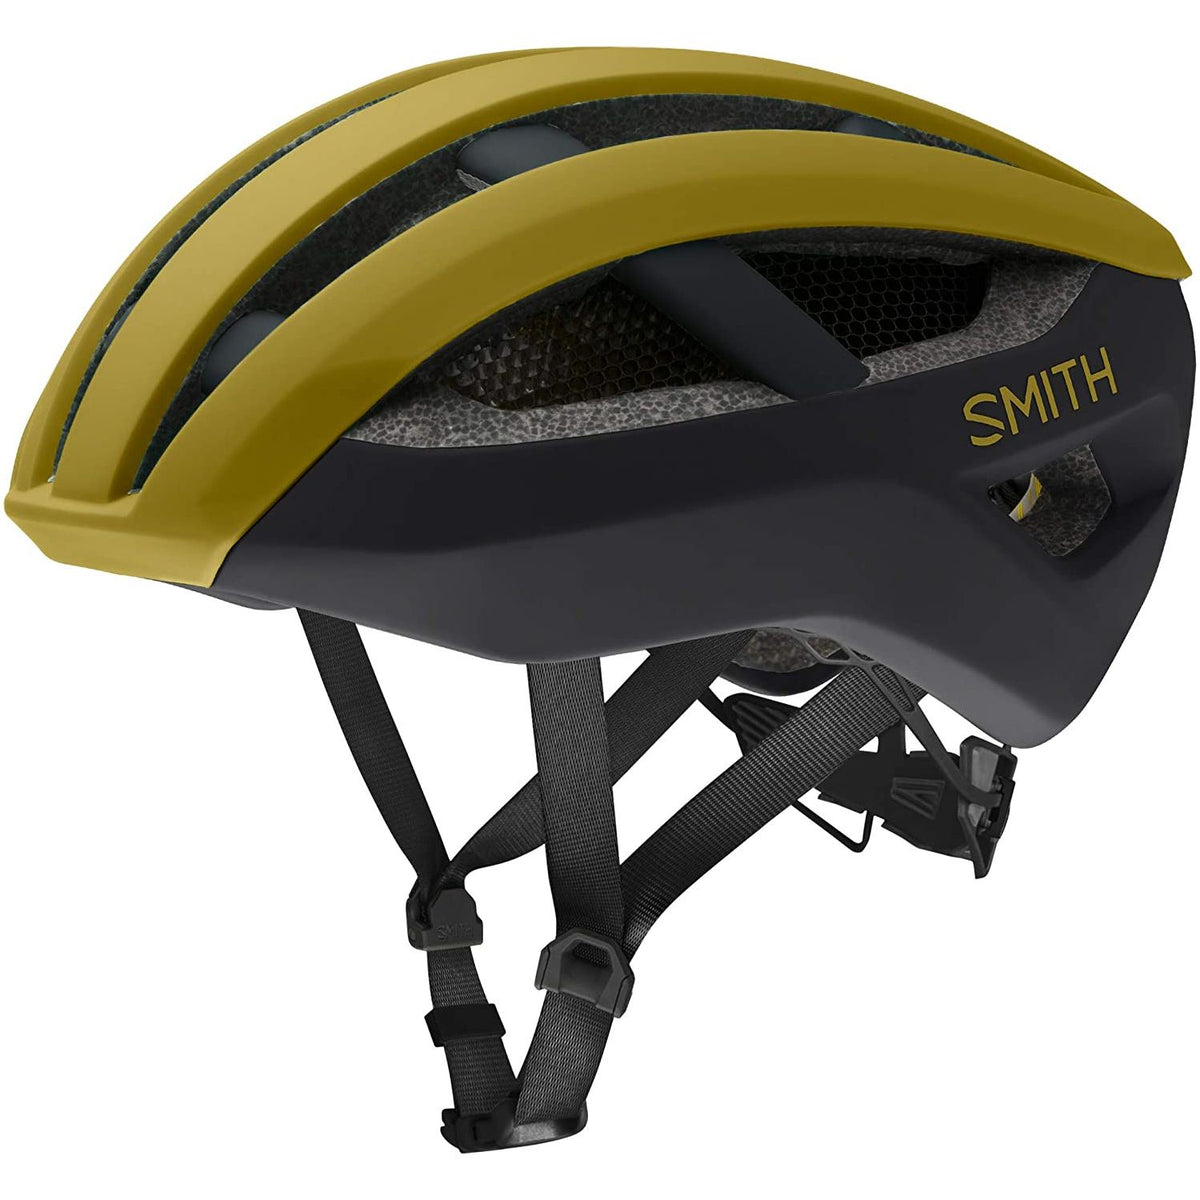 Smith Optics Network MIPS Helmet